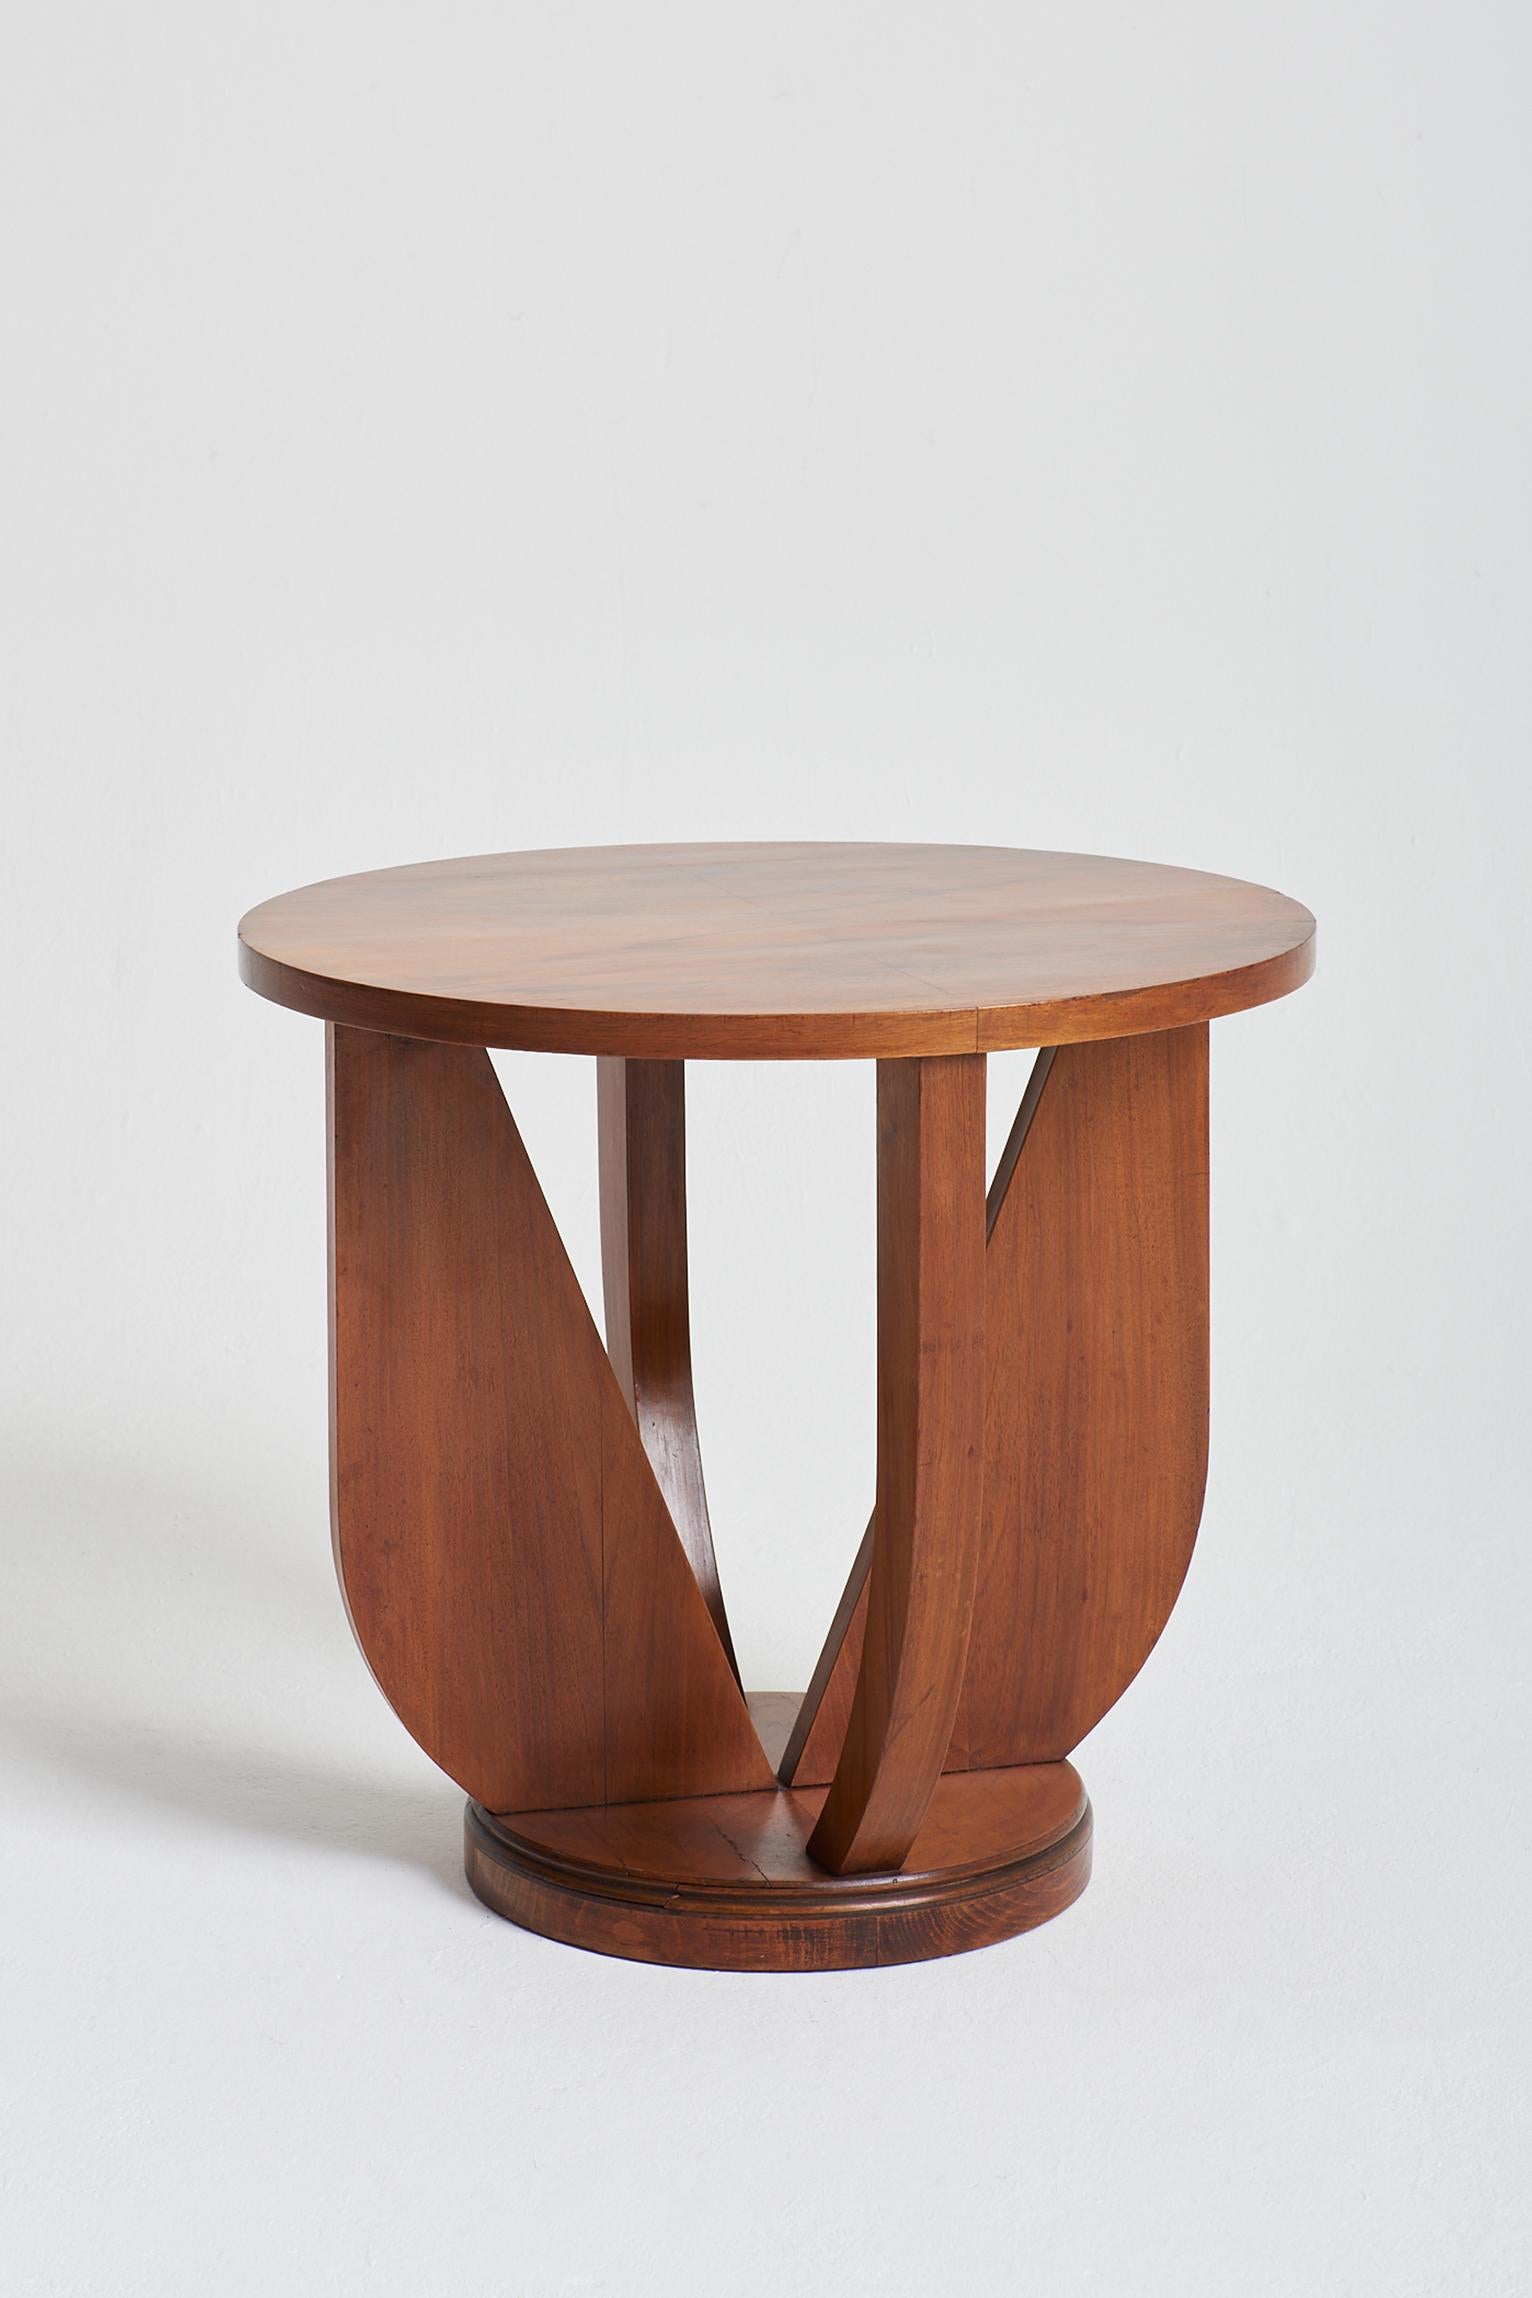 An Art Deco walnut side table.
France, Circa 1930.